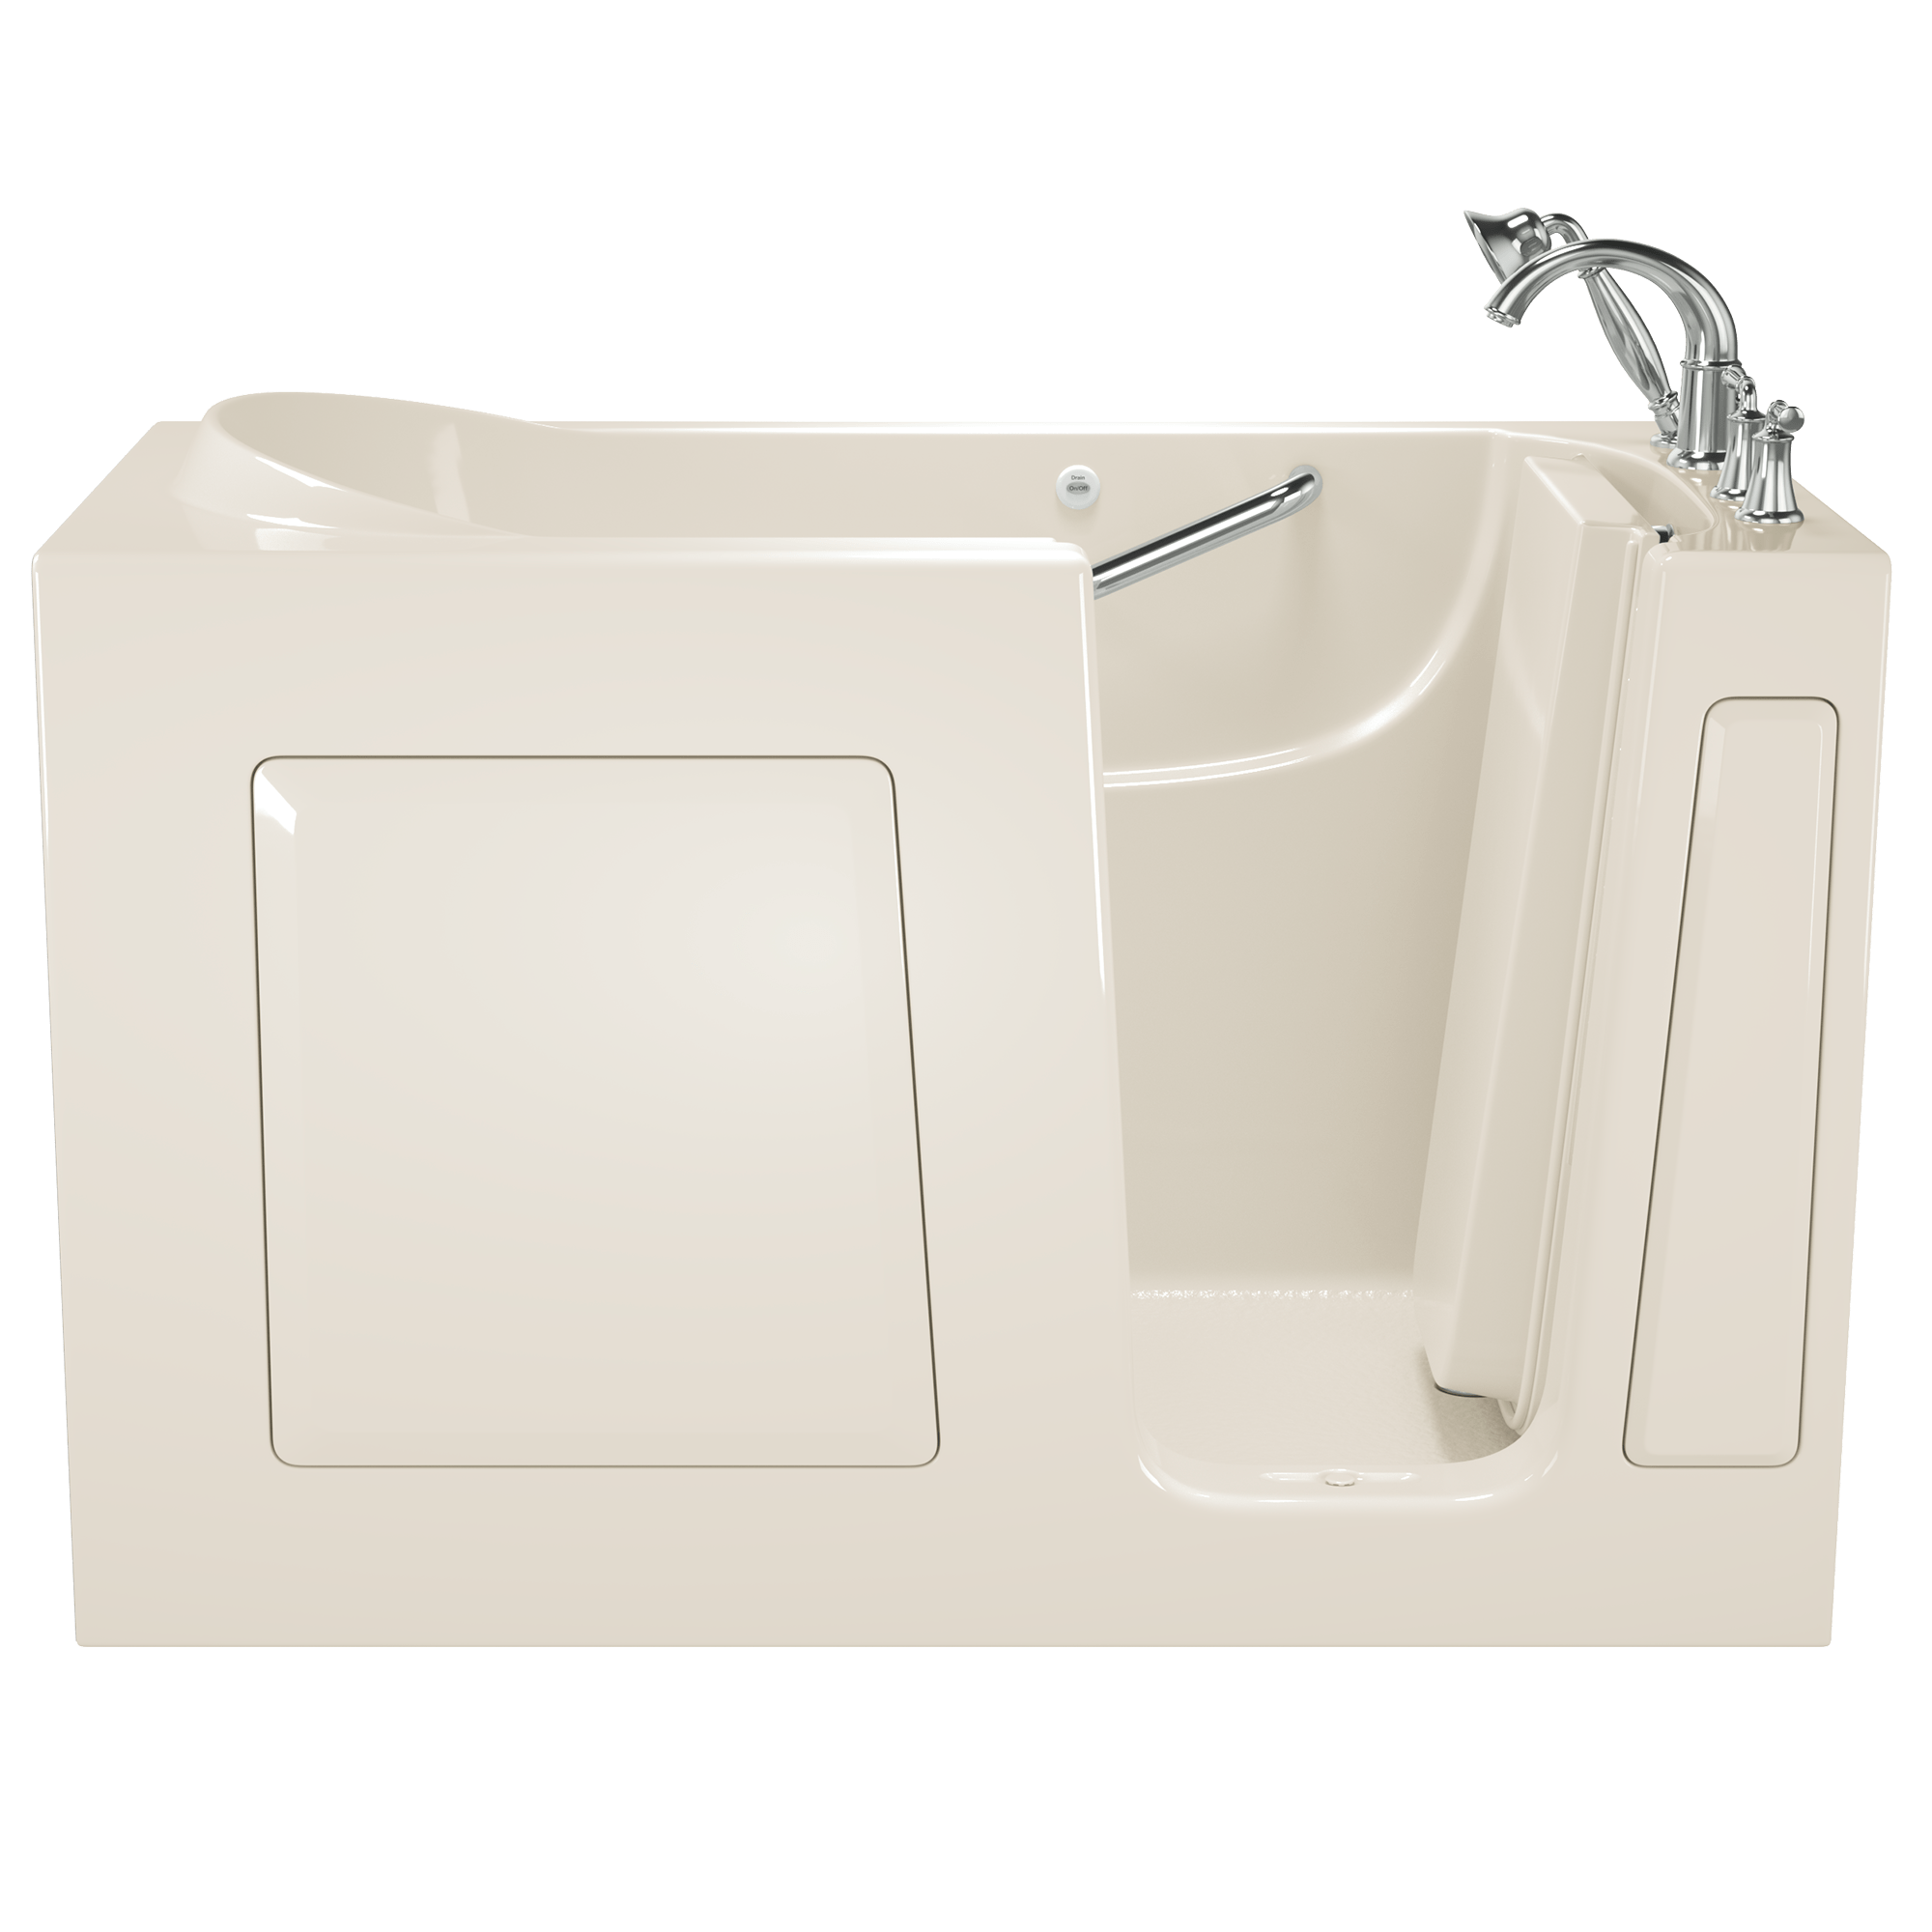 Gelcoat Value Series 30x60 Inch Soaking Walk-In Bathtub - Right Hand Door and Drain